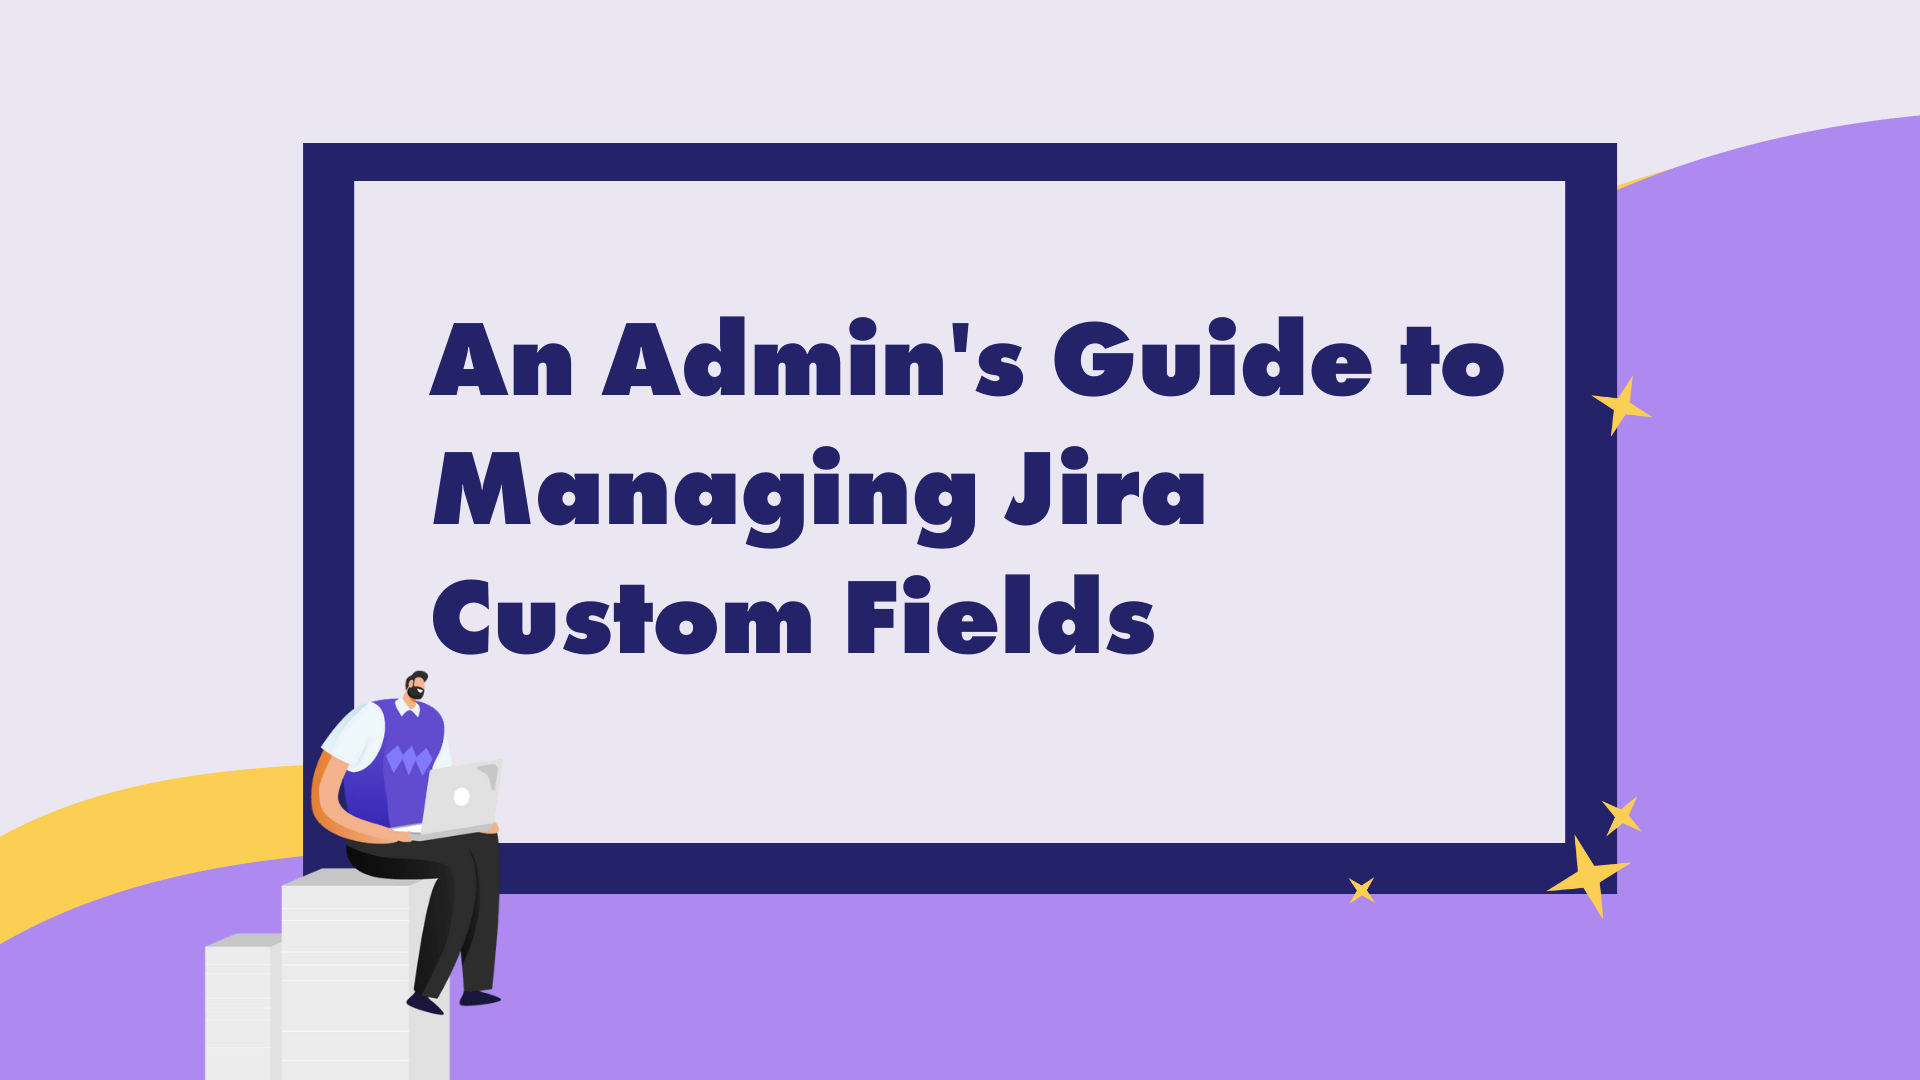 An Admin’s Guide to Managing Jira Custom Fields